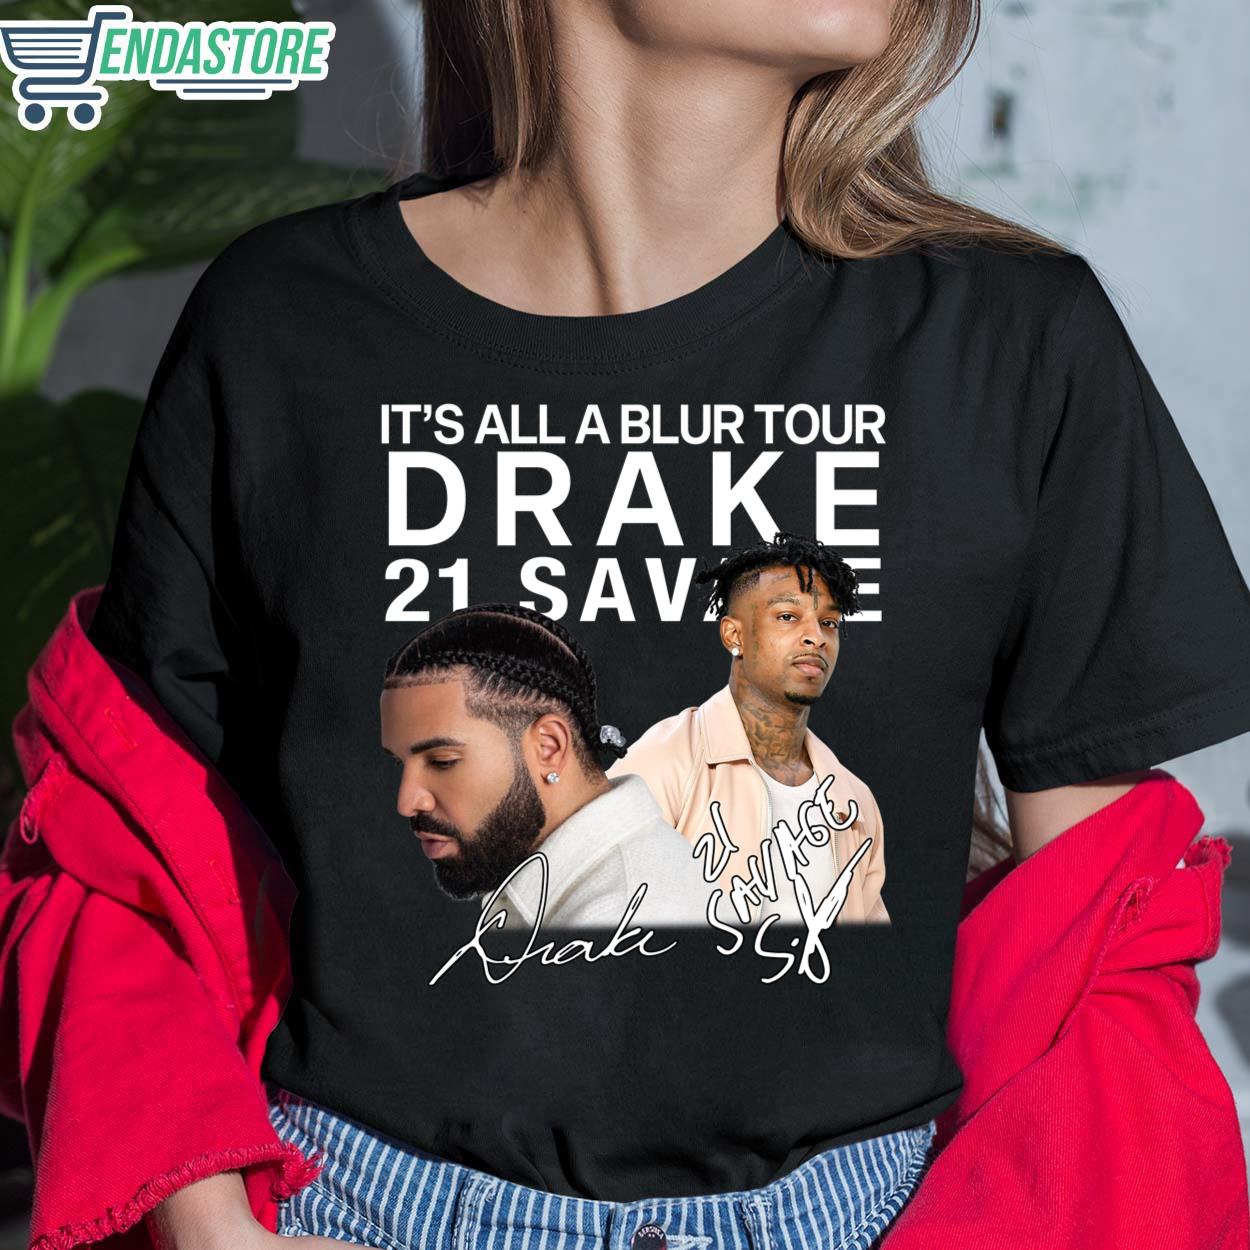 21 Savage x Drake “It's All A Blur” Hoodie – Hub City Soles